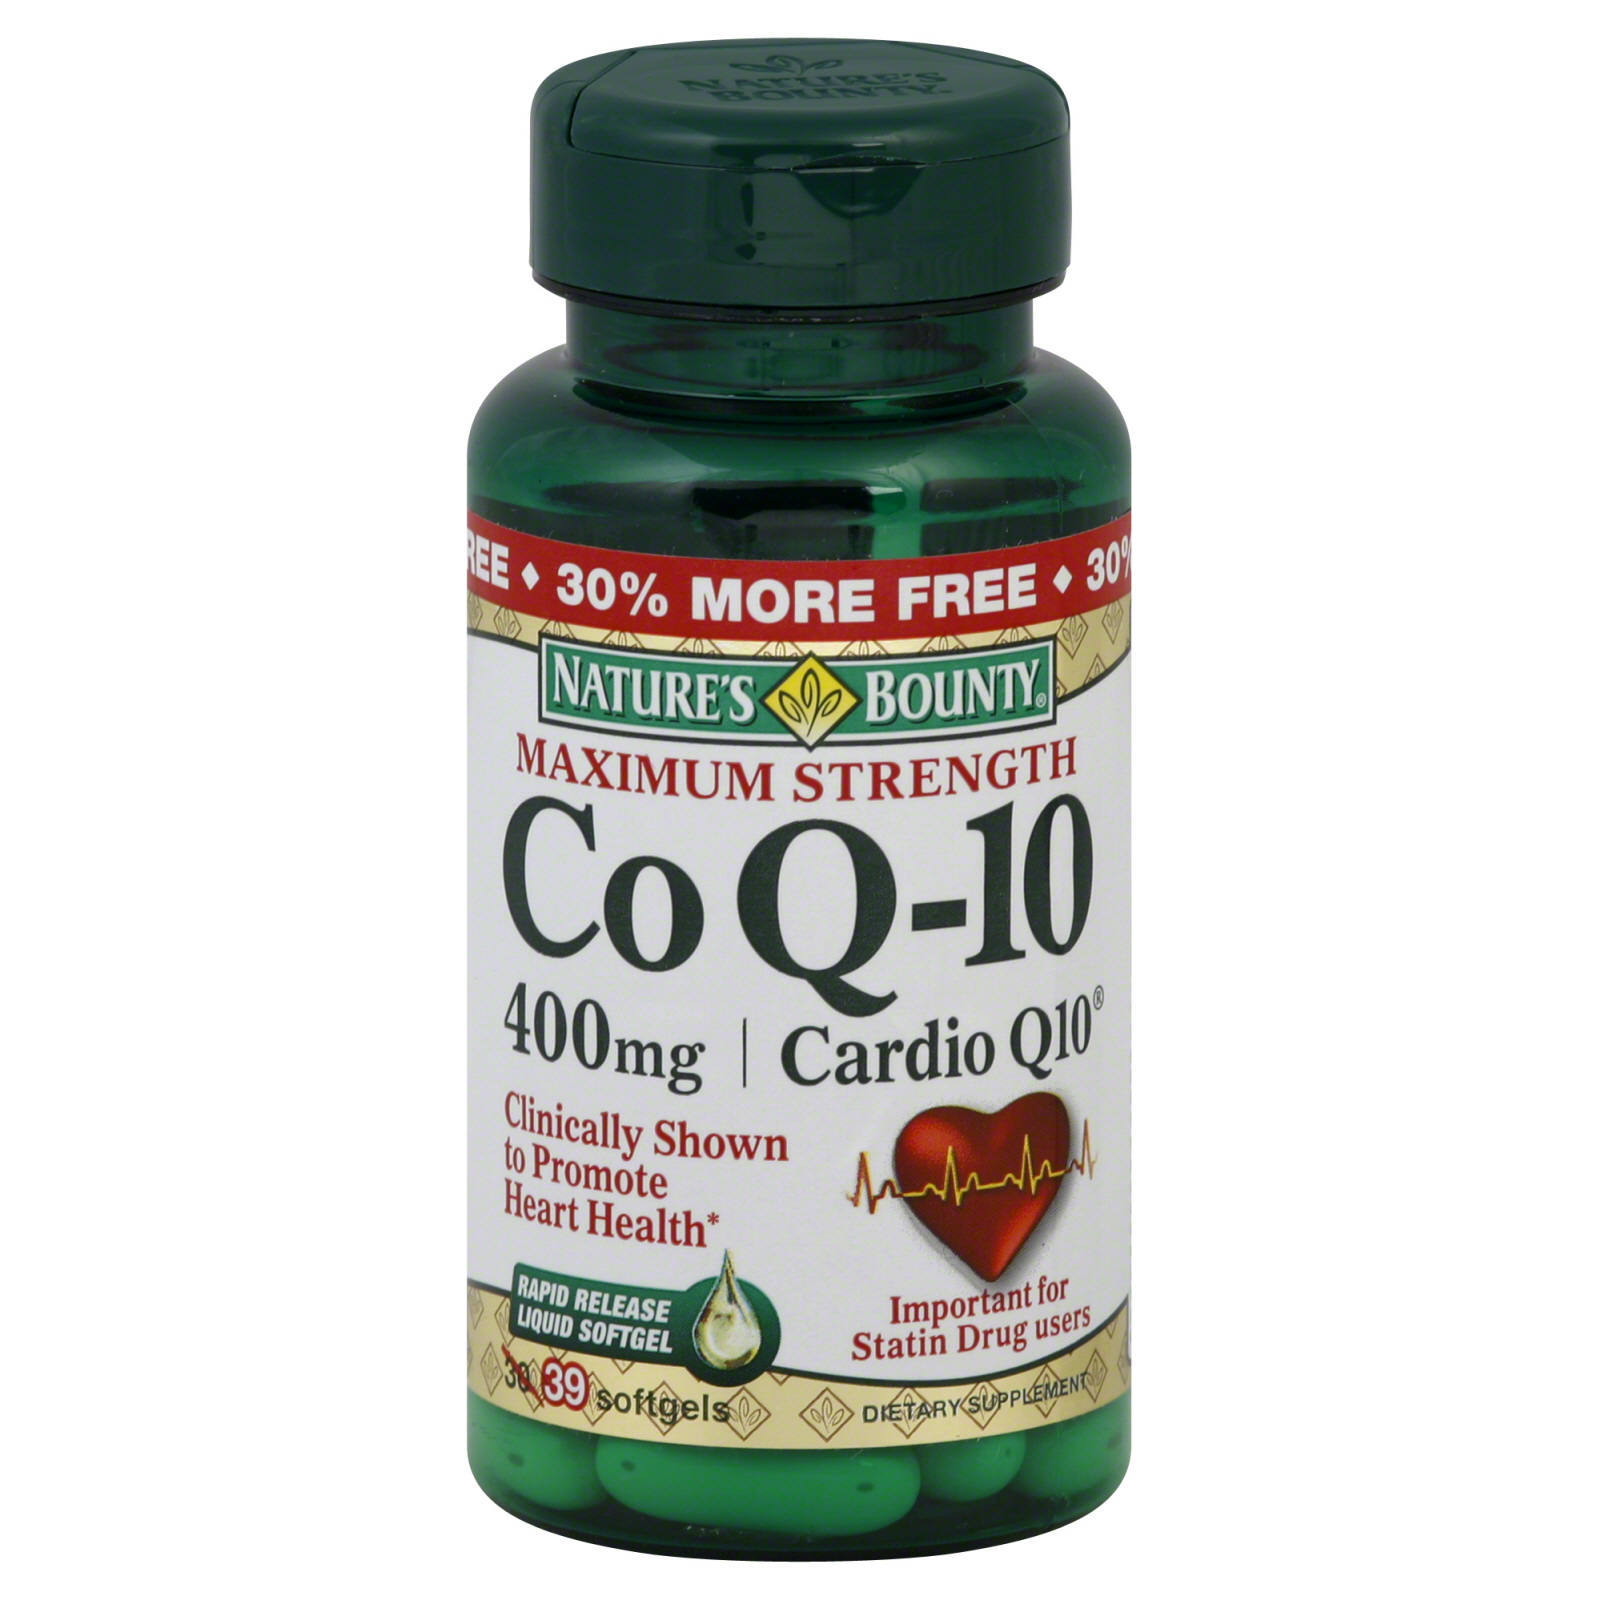 Cardio Q10 Co Q-10, Maximum Strength, 400 mg, Rapid Release Liquid Softgel, 39 softgels